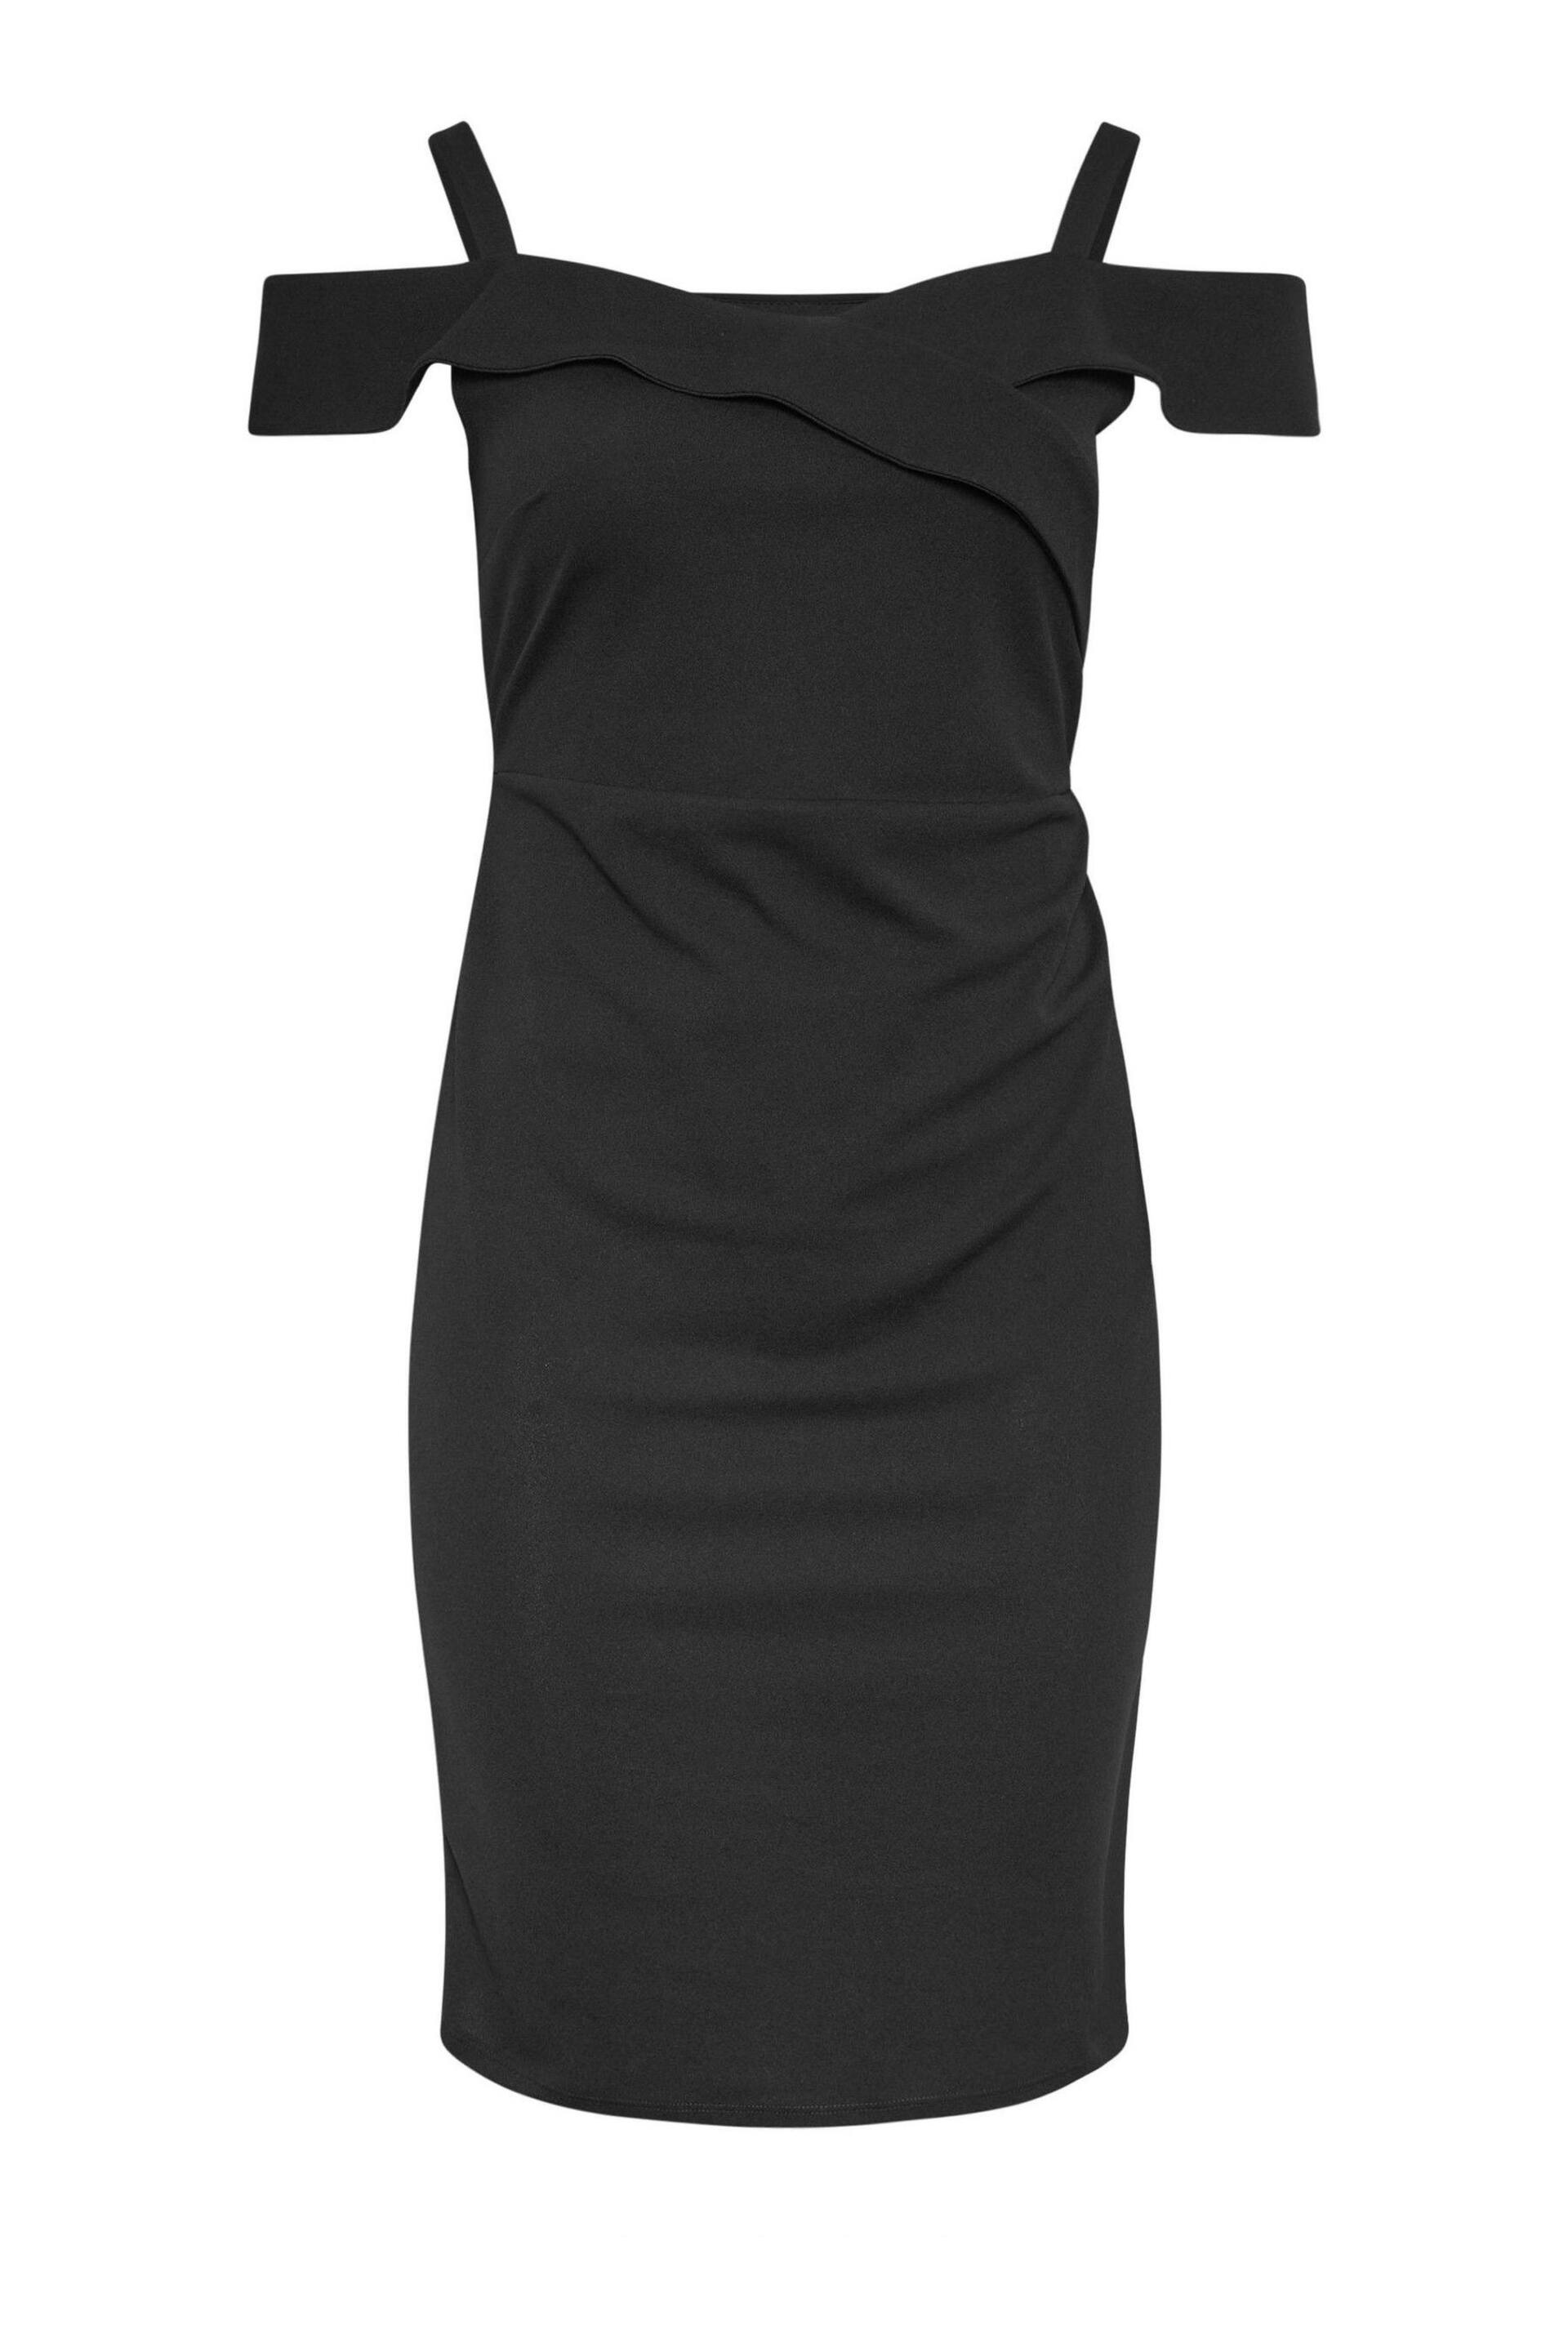 Yours Curve Black Bardot Shift Dress - Image 5 of 5